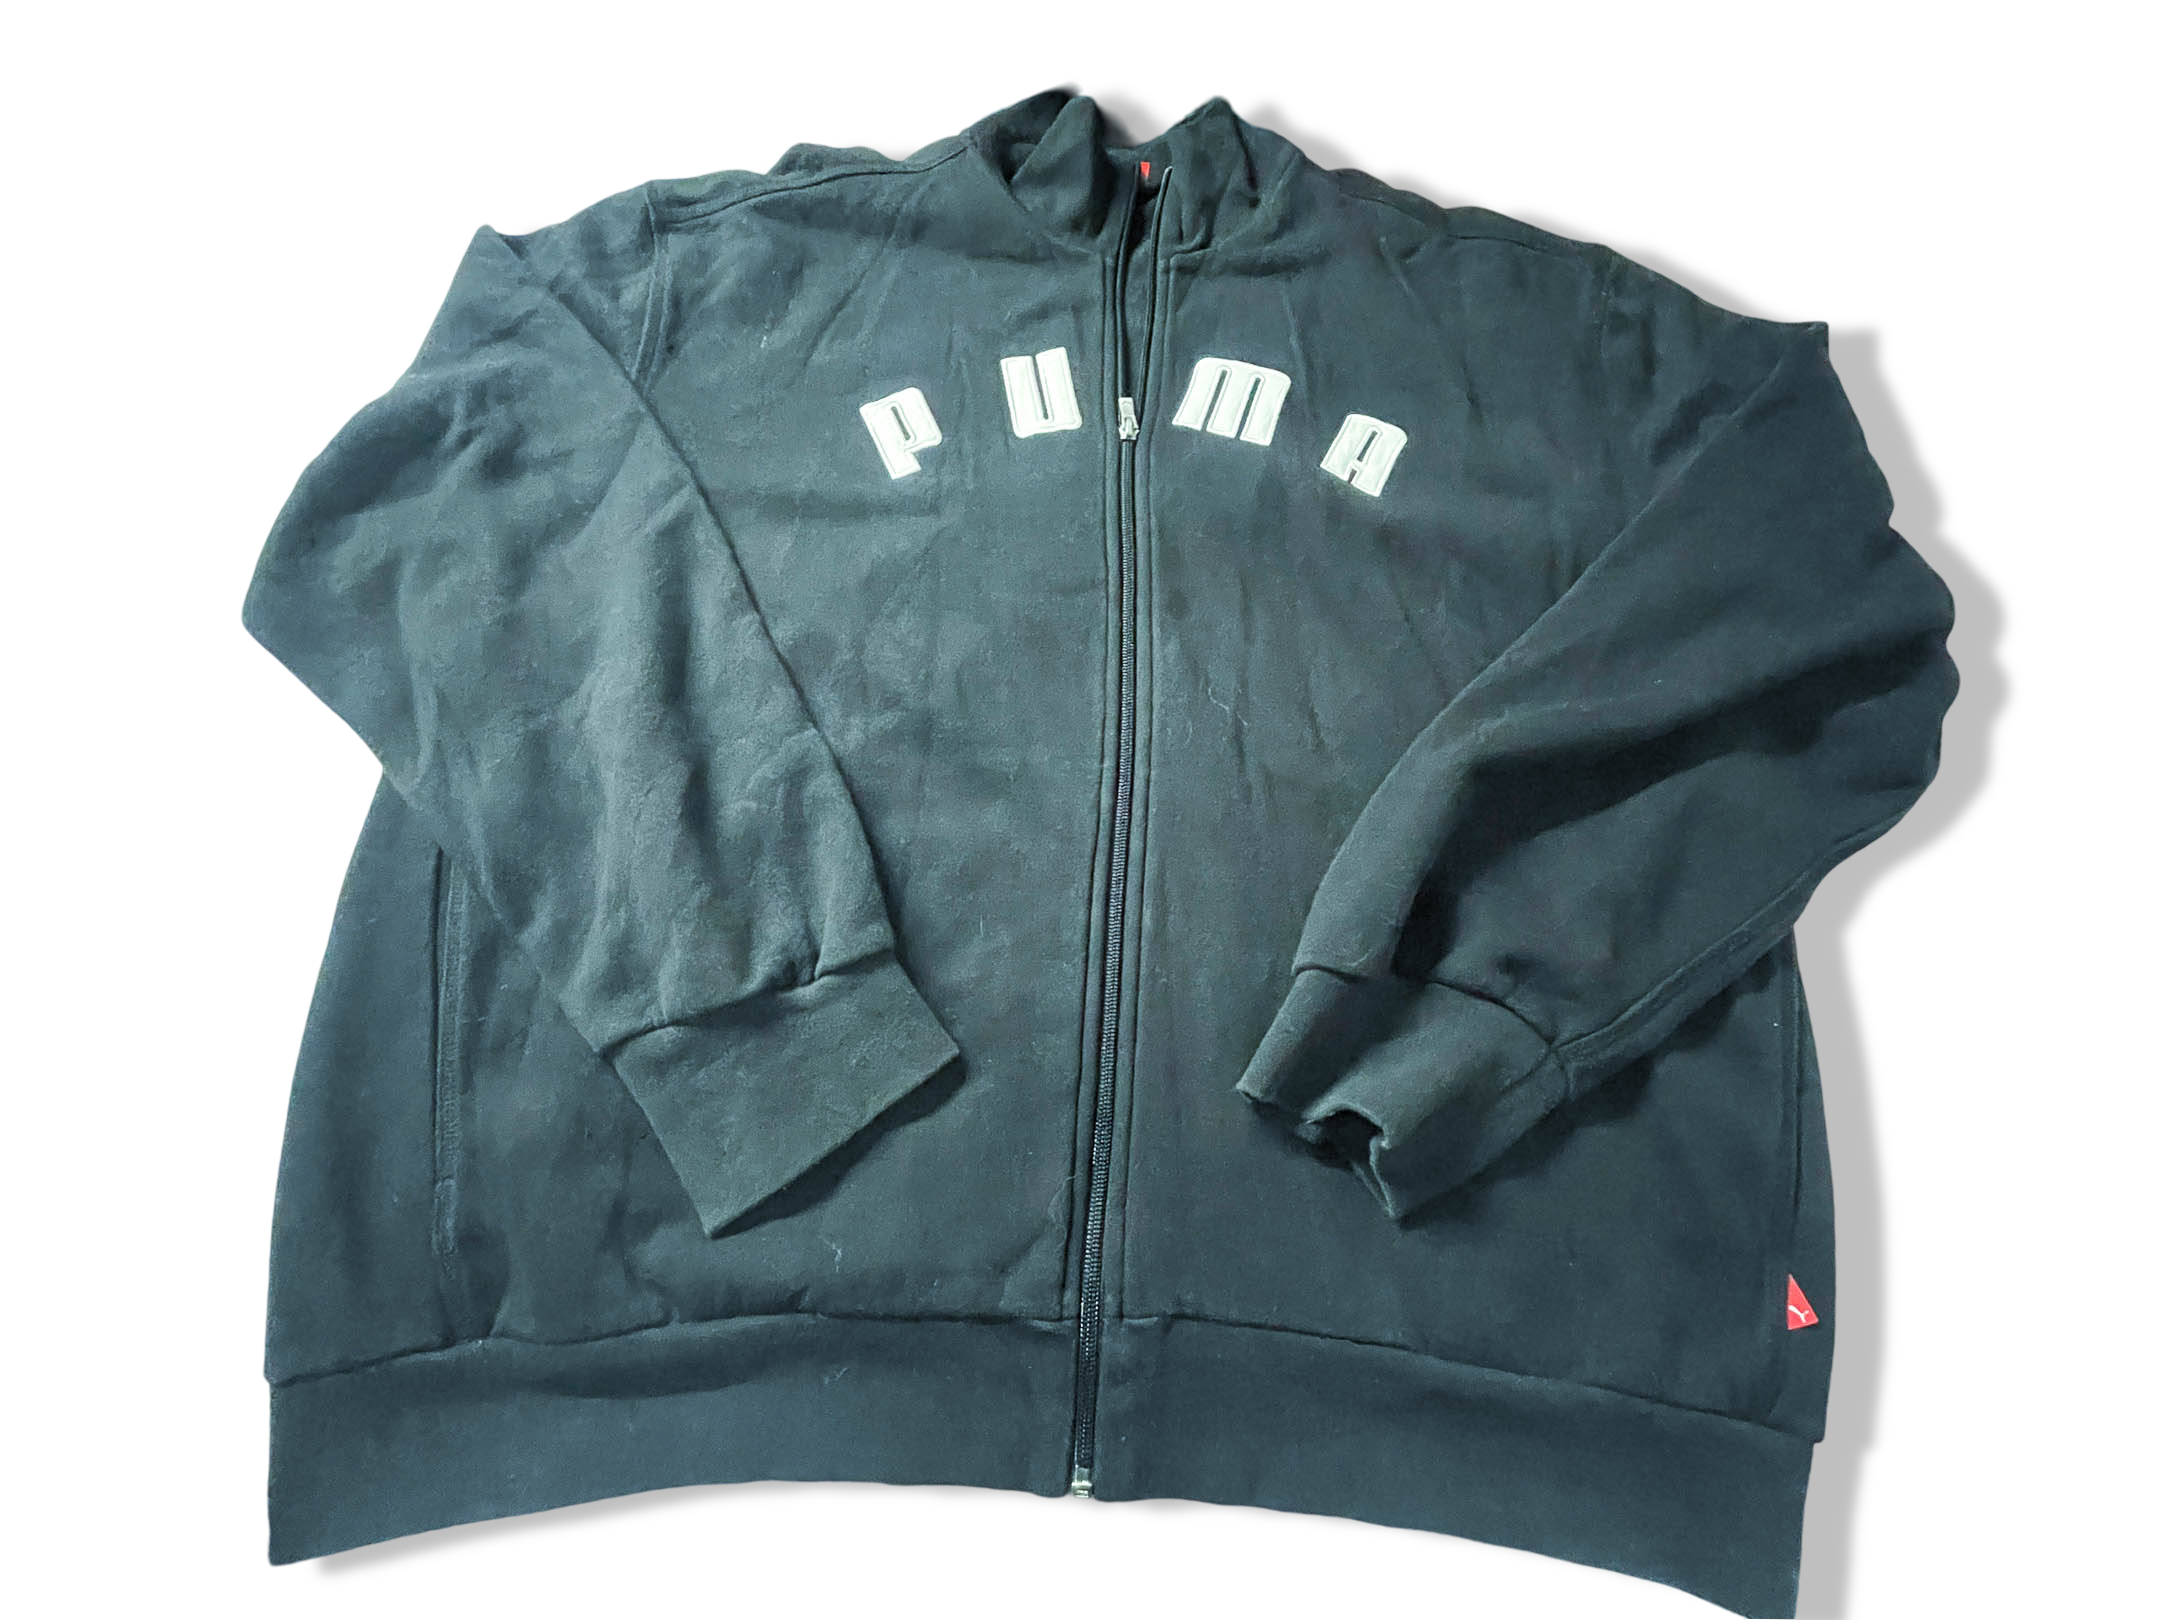 Vintage Men's Black Puma full zip high neck jacket in 2XL|L32W26|SKU 3889